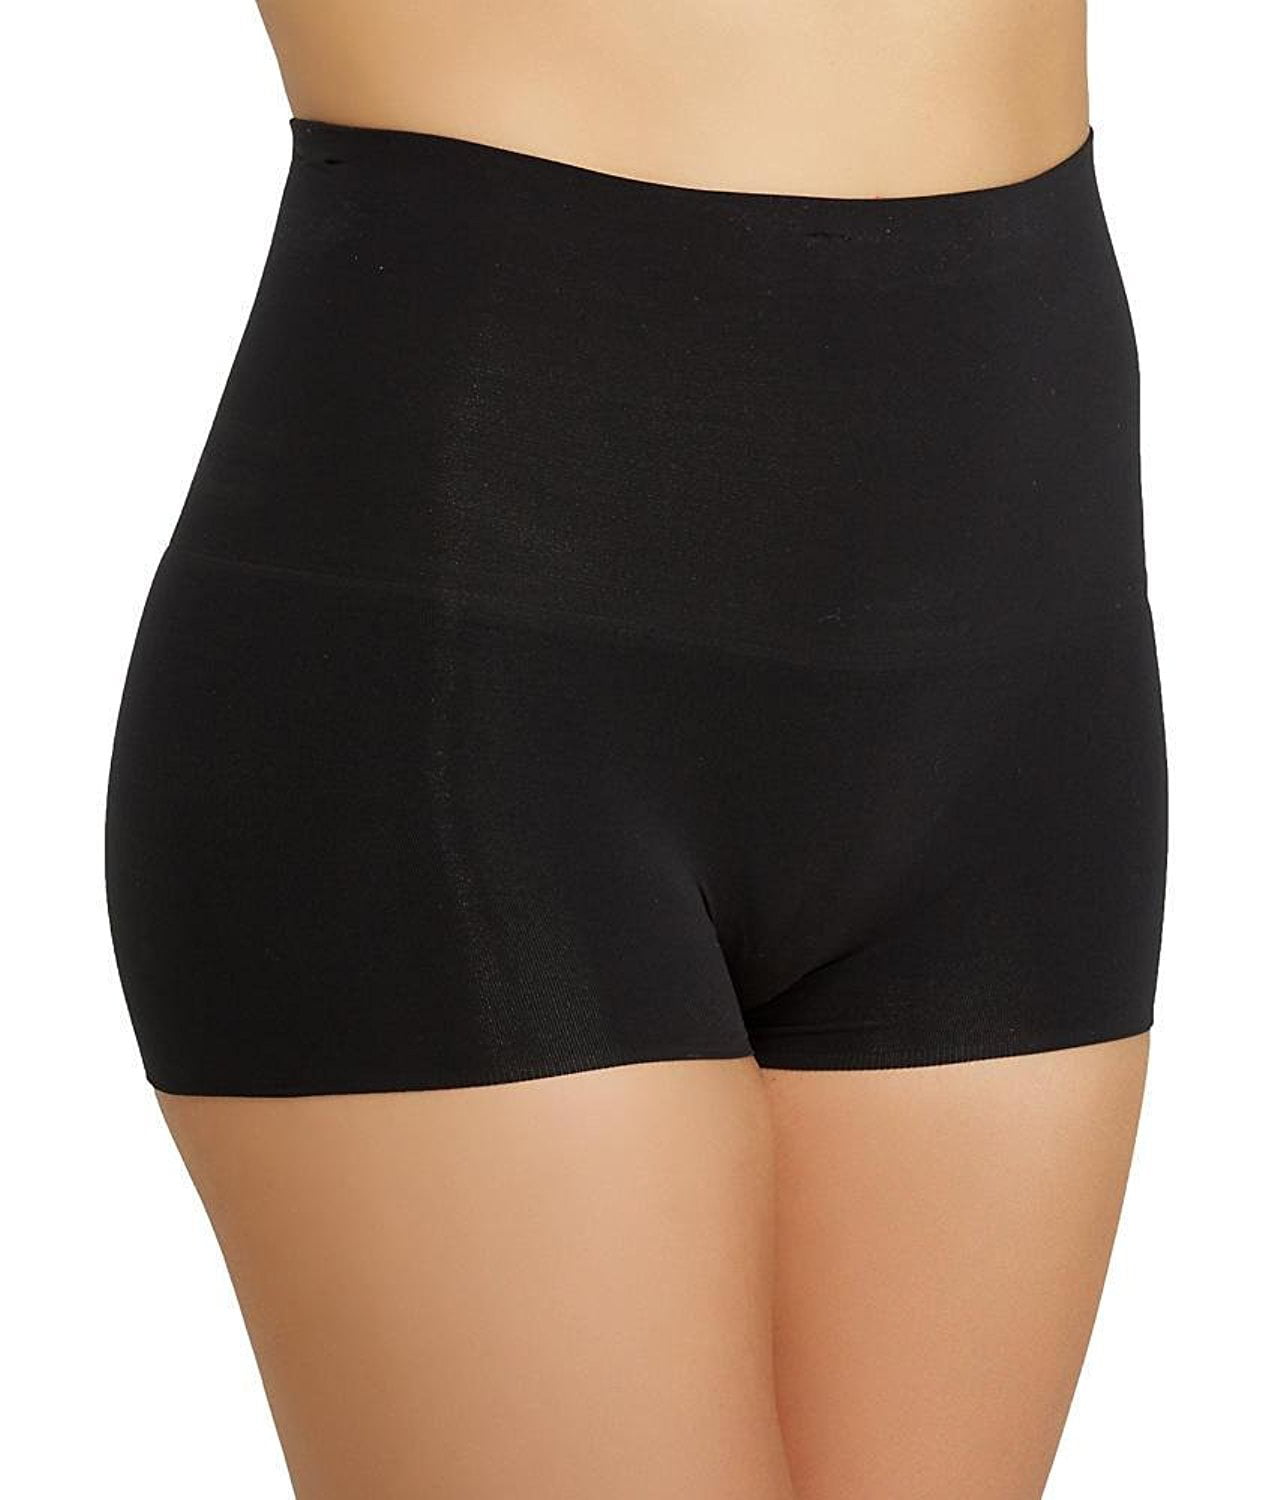 SPANX Haute Contour Shorty Tummy Control Shorts Shapewear 2330, Black, M 